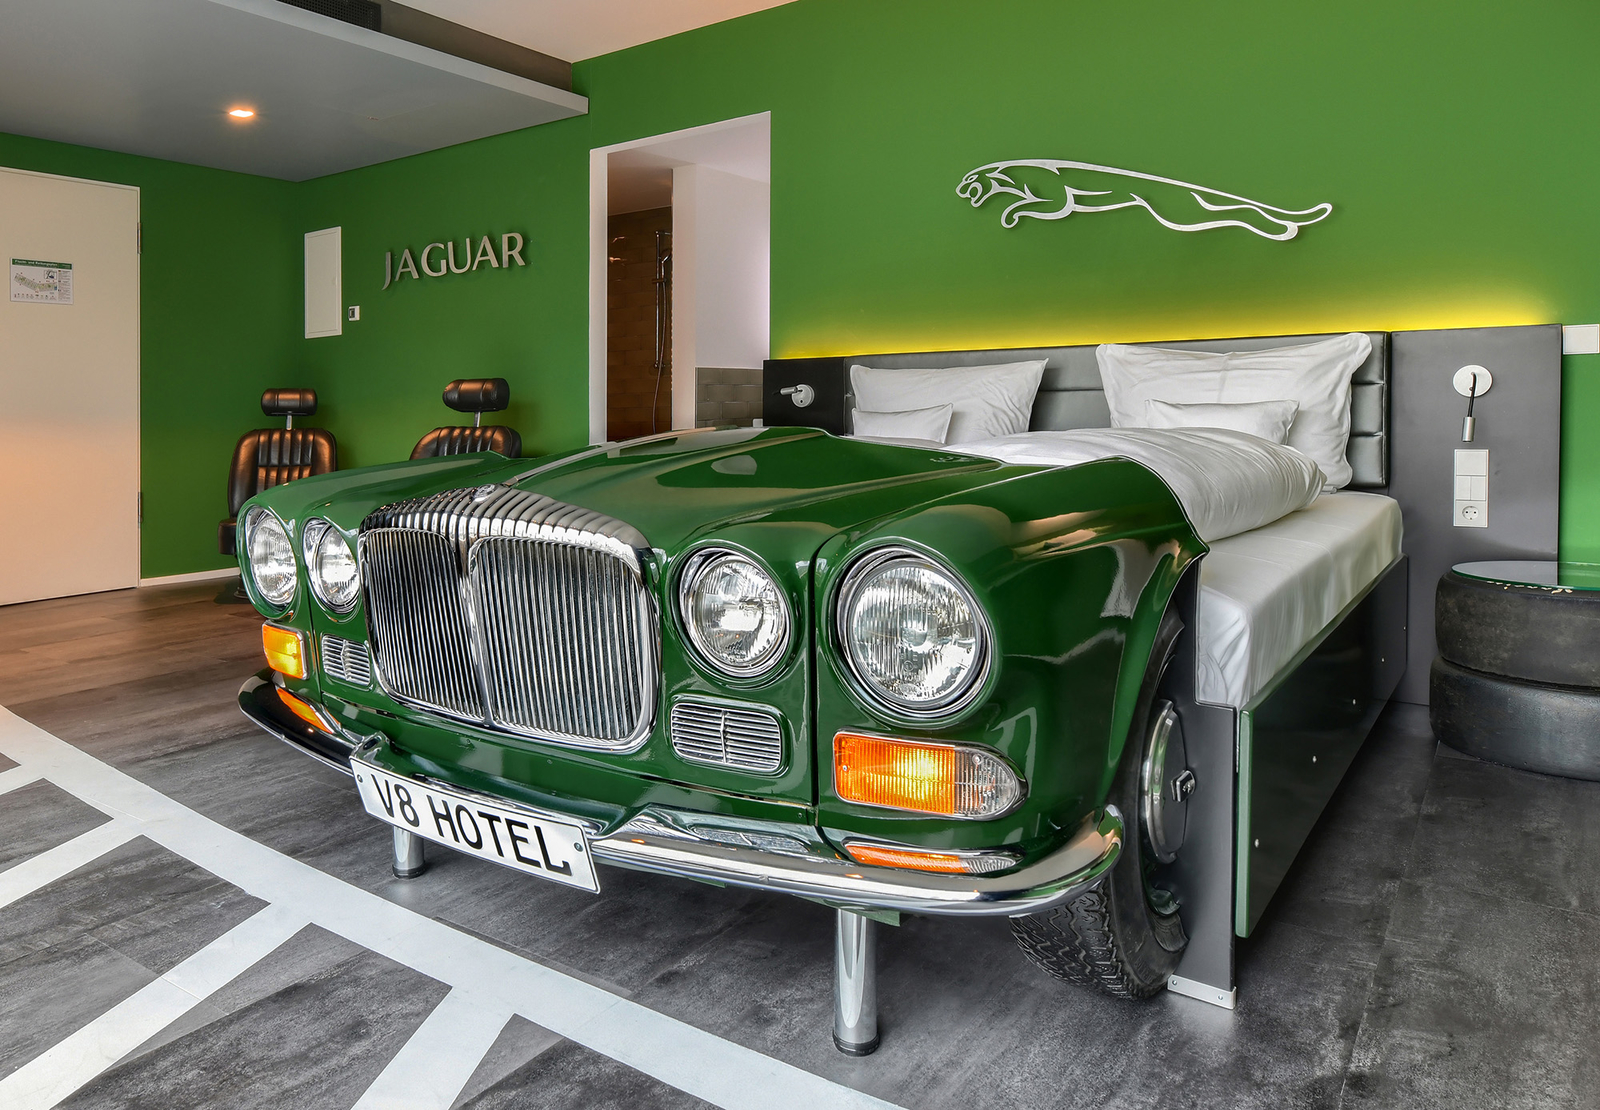 Grünes Autobett im Jaguar-Themenzimmer im V8 Hotel an einer grünen Wand mit silbernem Jaguar-Logo